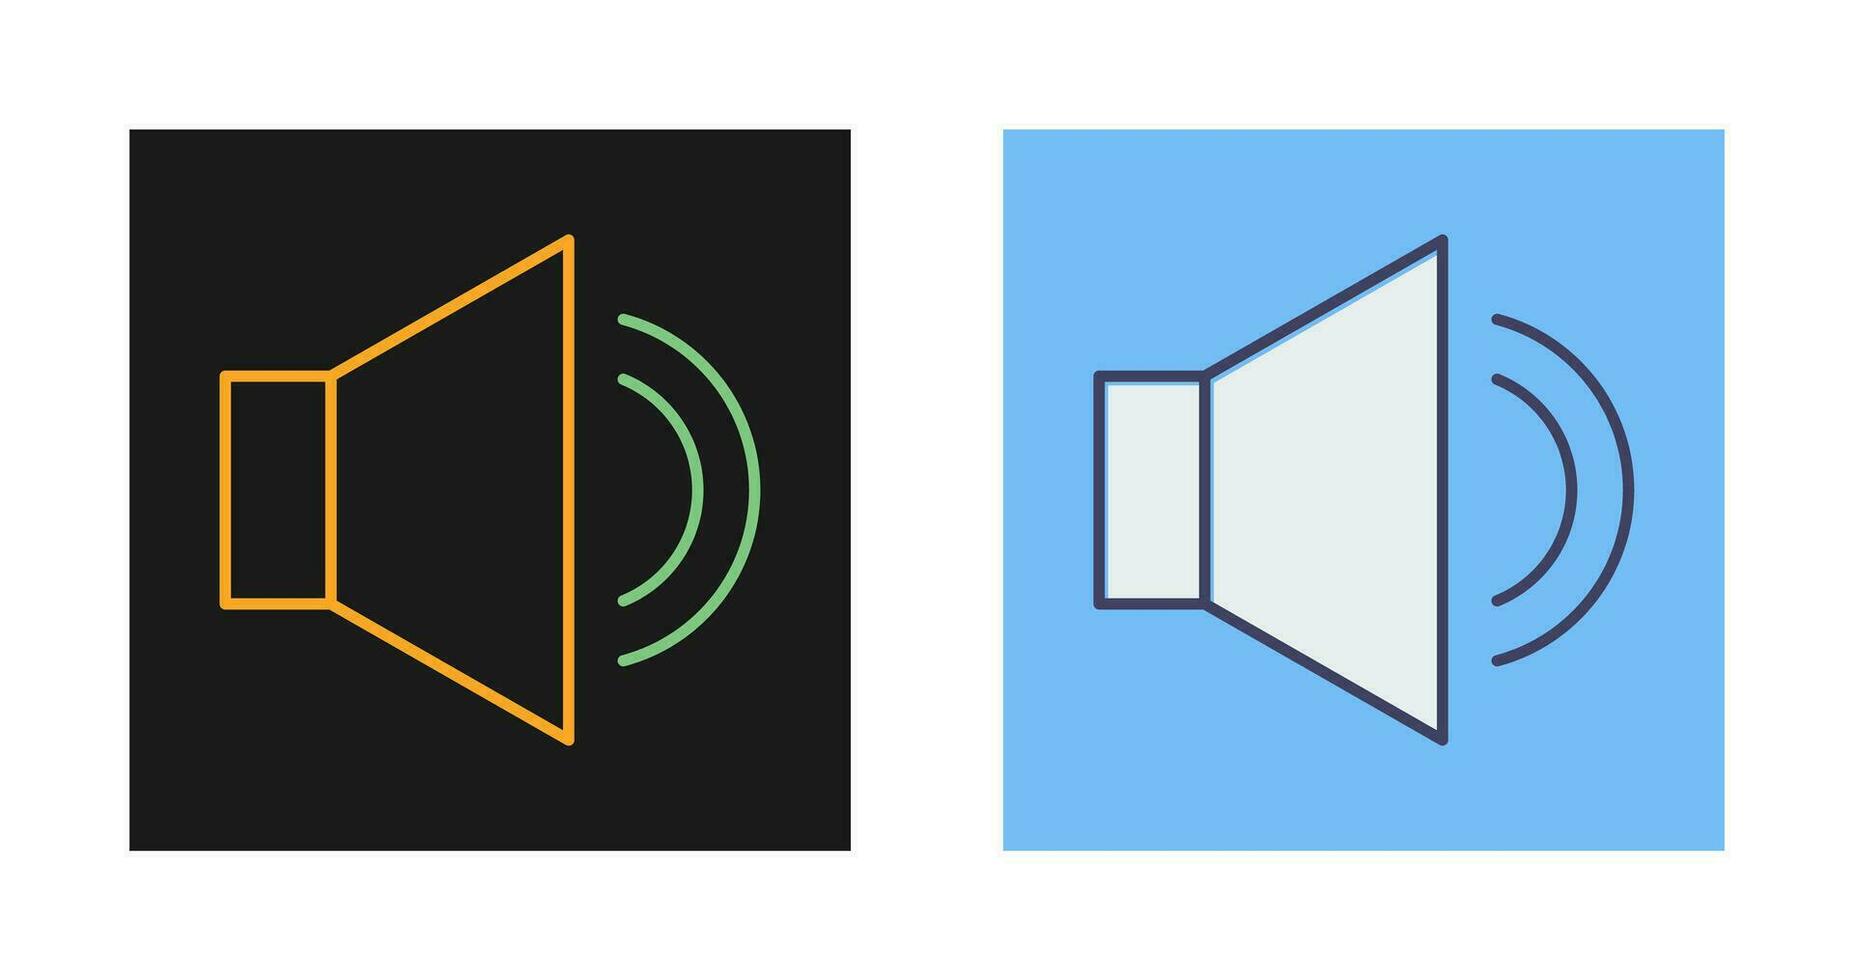 audio profiler vektor ikon